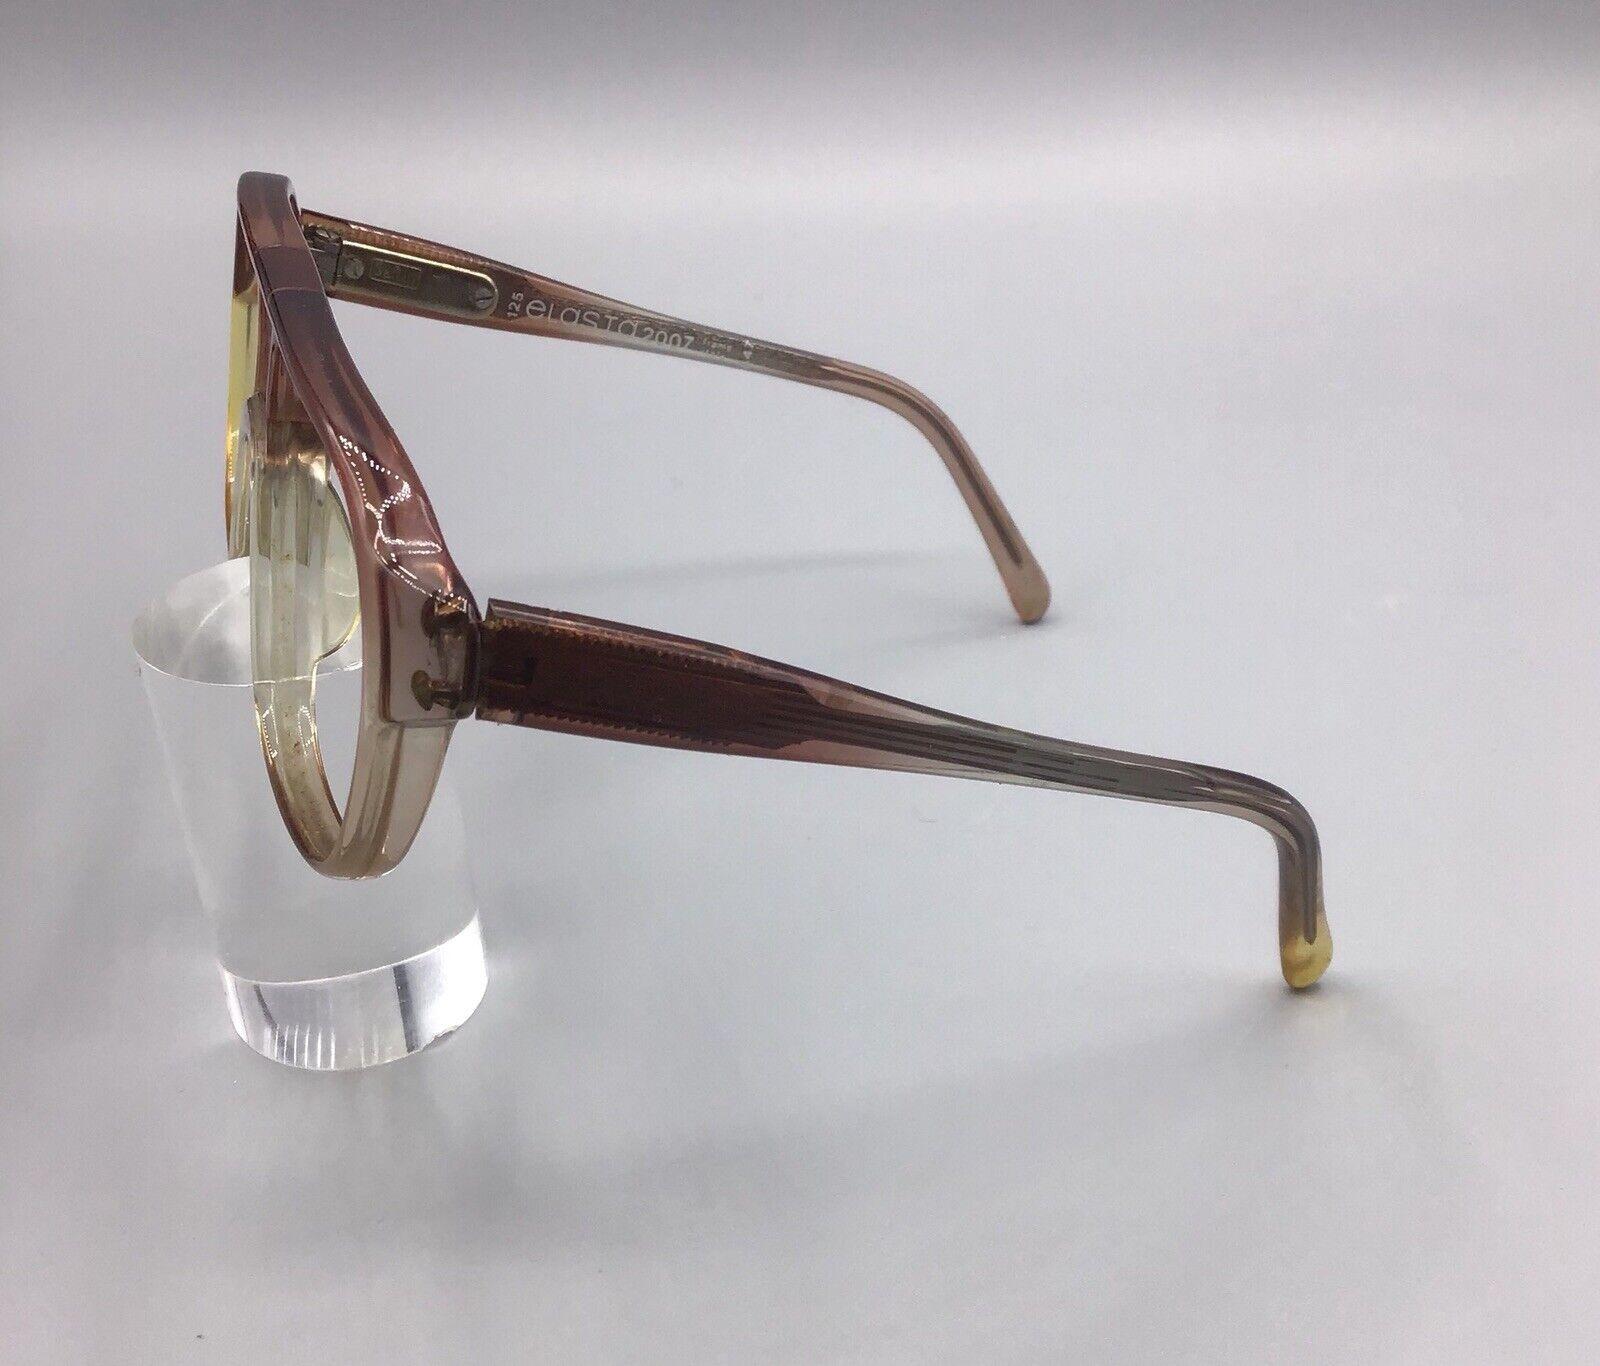 Safilo occhiale vintage elasta 2007 frame Italy brillen lunettes